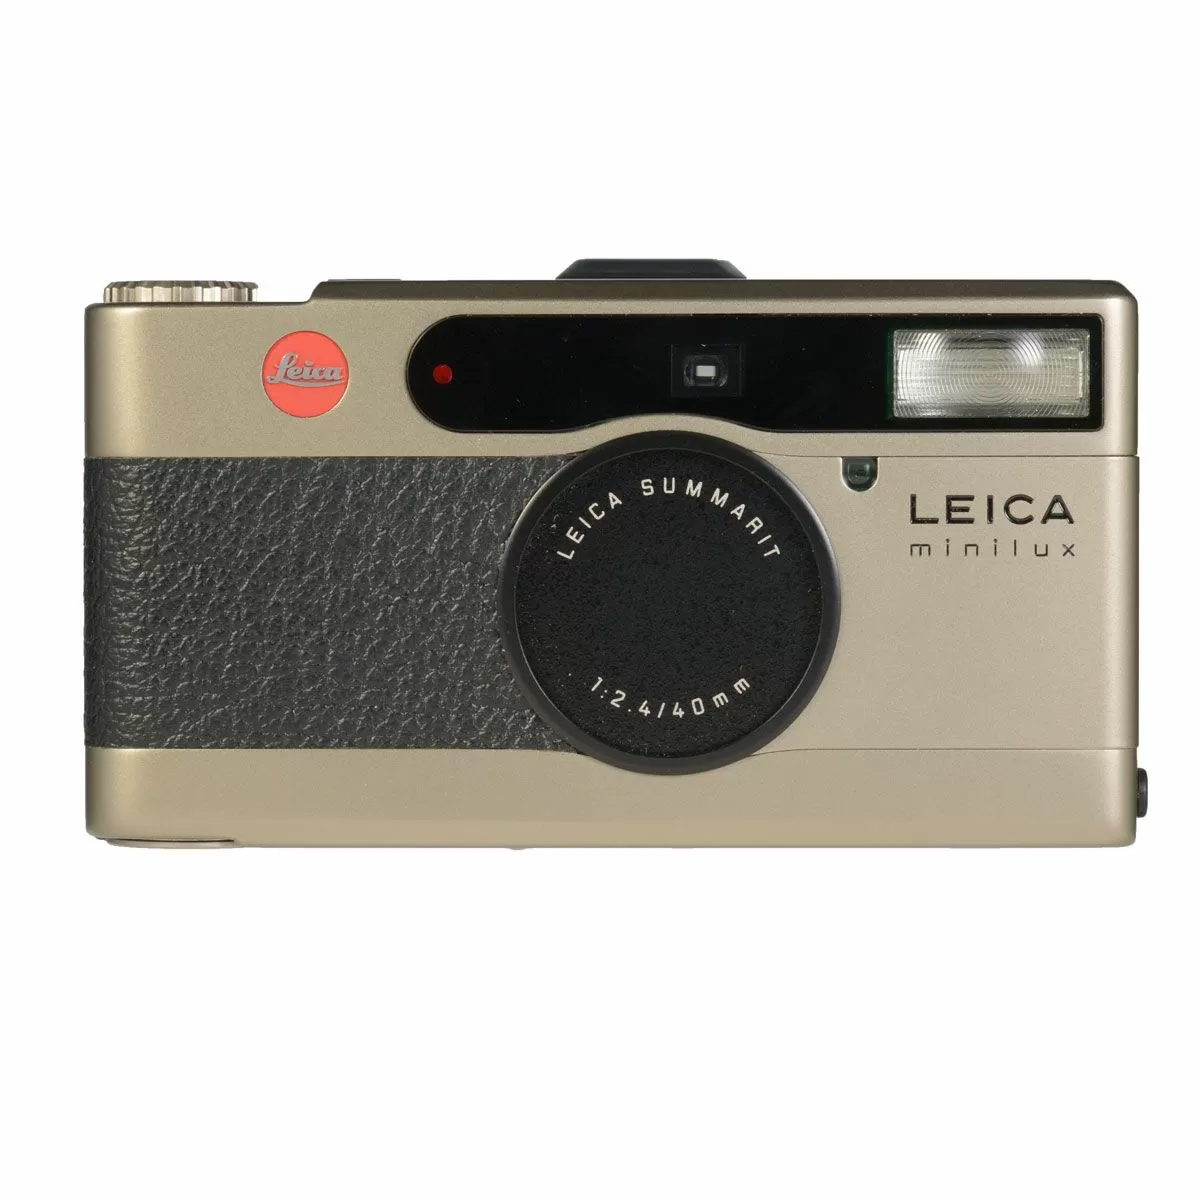 Leica Minilux (Summarit 40mm f/2.4) б/у